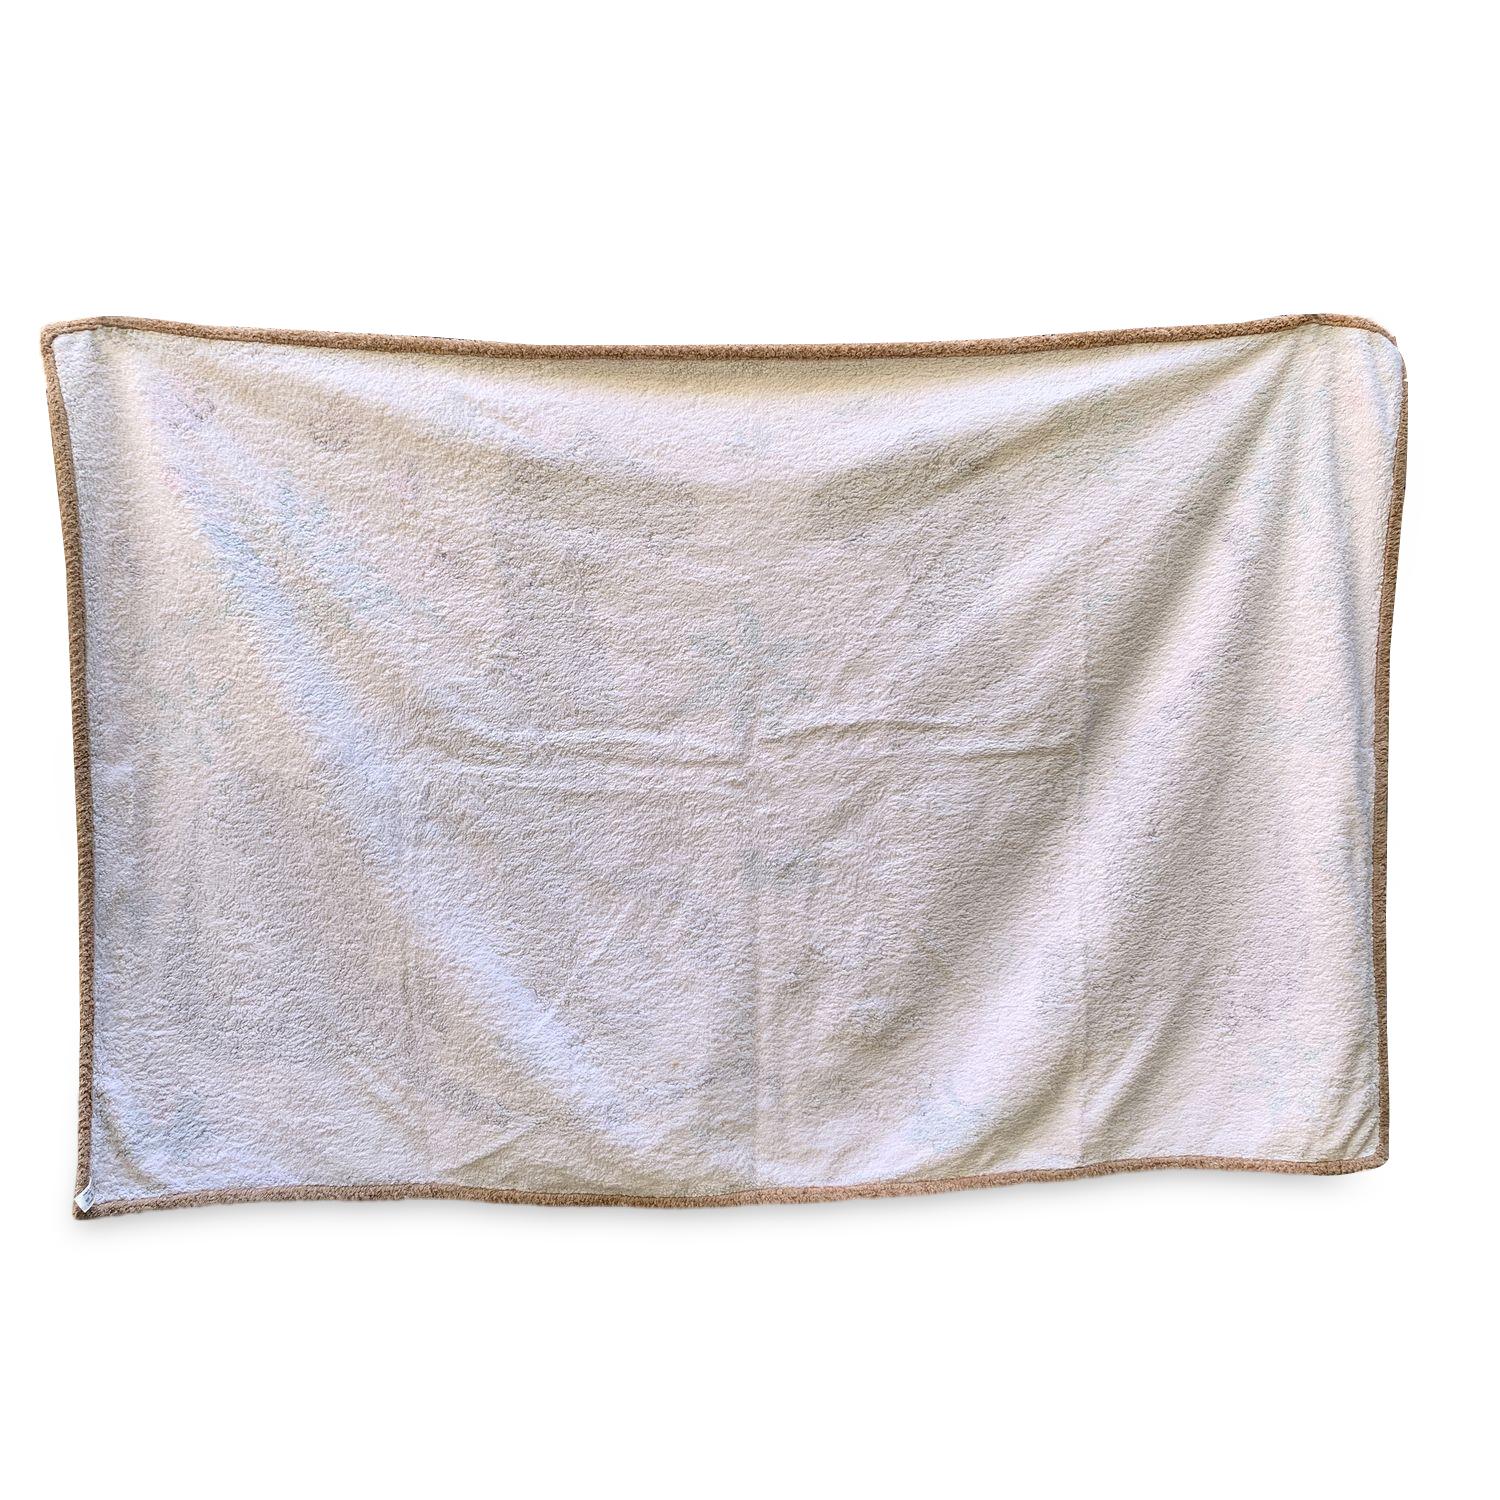 Vintage Hermes Terrycloth Cotton Large Beach Towel with Leopards design. 100% cotton. Beige border. Plain white back. Measurements: 36 x 59 inches - 91.5 x 149,86 cm.

Details

MATERIAL: Cotton

COLOR: White

MODEL: -

GENDER: Unisex Adults

COUNTRY